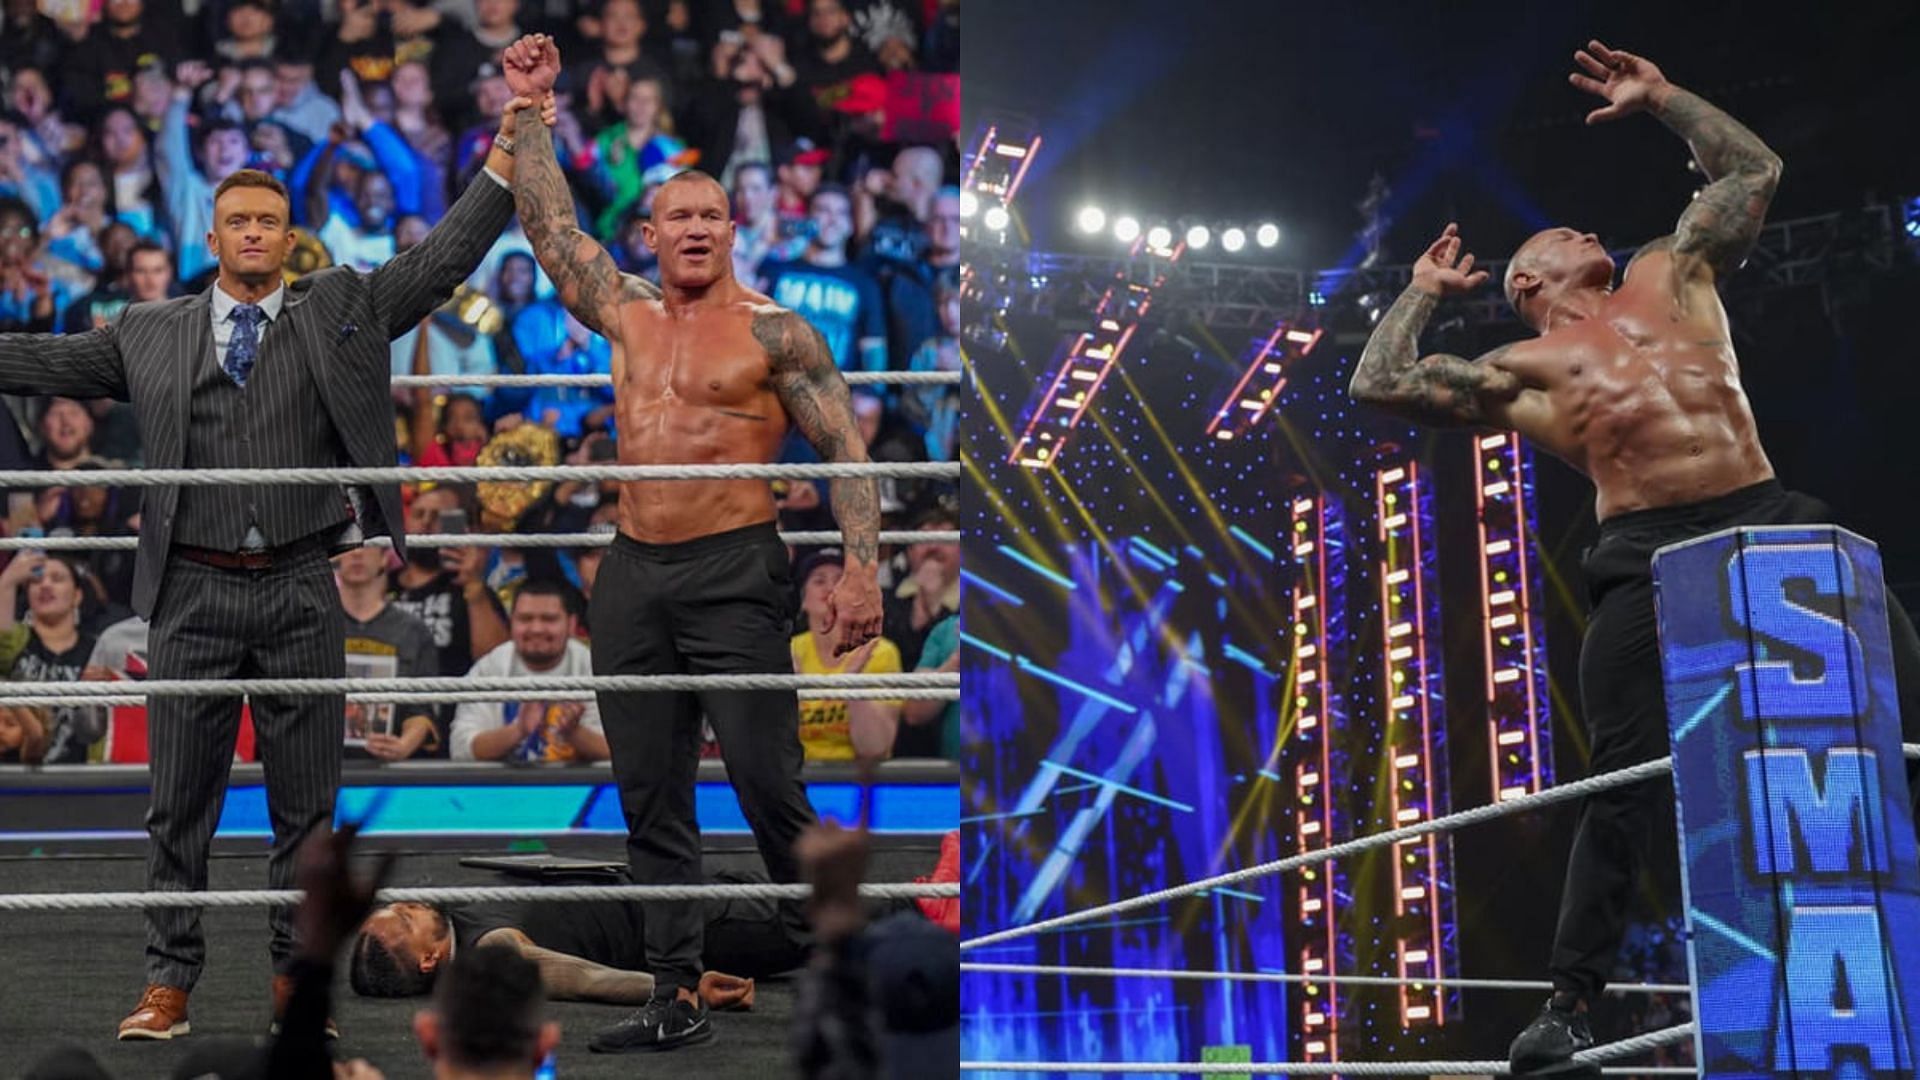 Randy Orton hit Nick Aldis with an RKO on SmackDown